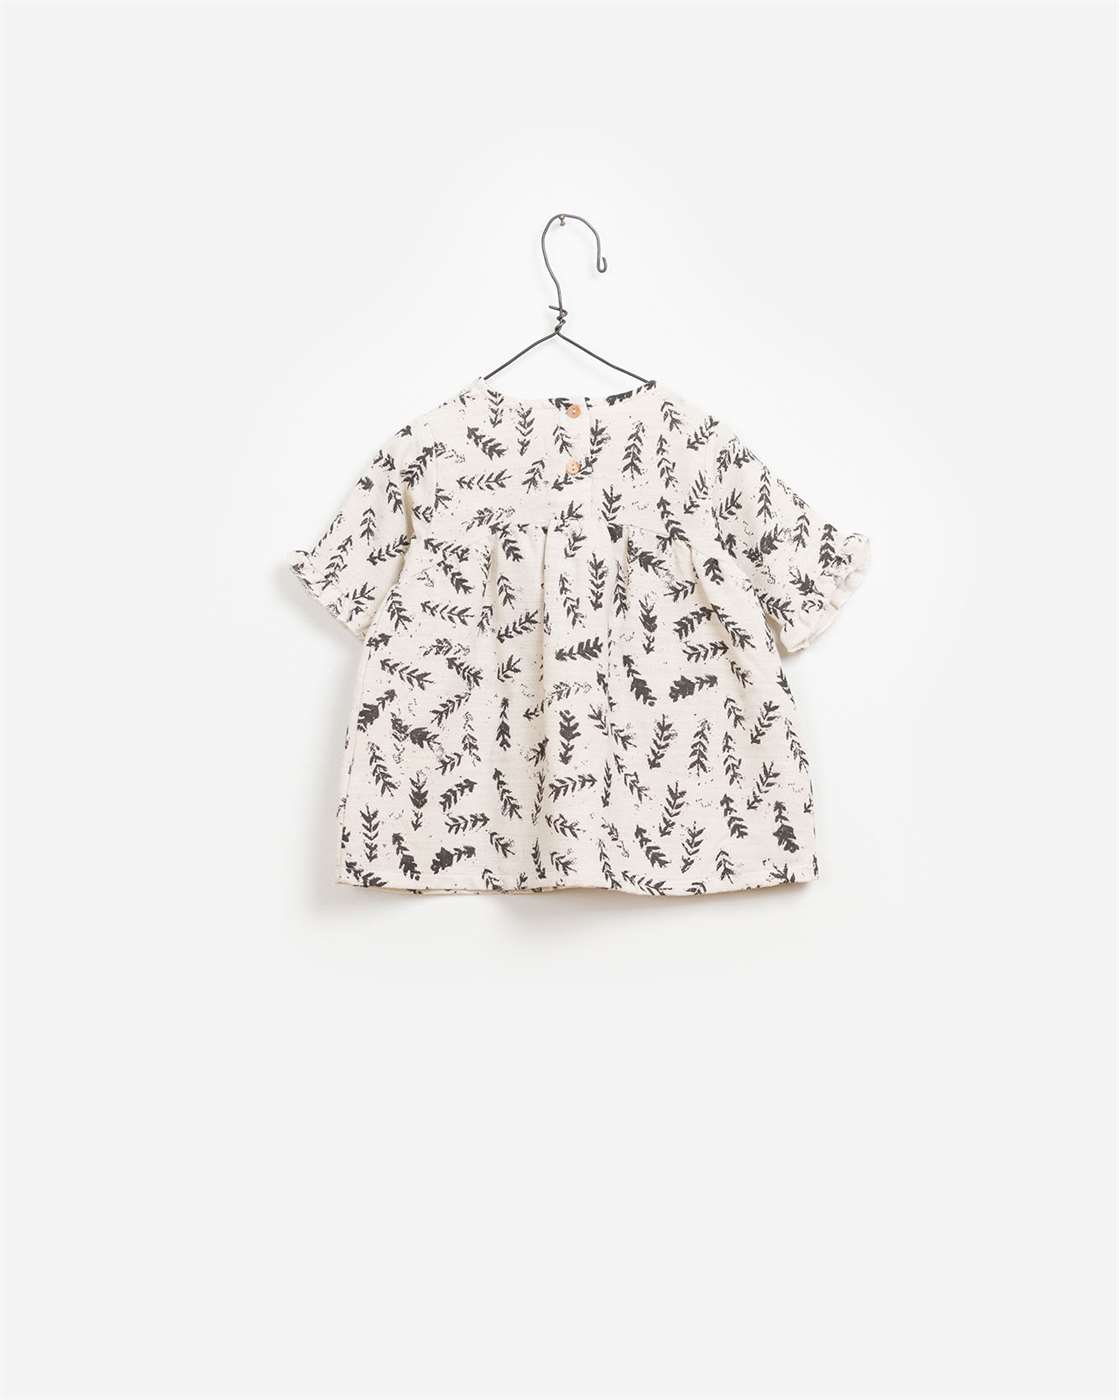 BeeBoo|BeeBoo PlayUp vêtement bébé baby cloth robe imprimé woven print dress blanche white 1